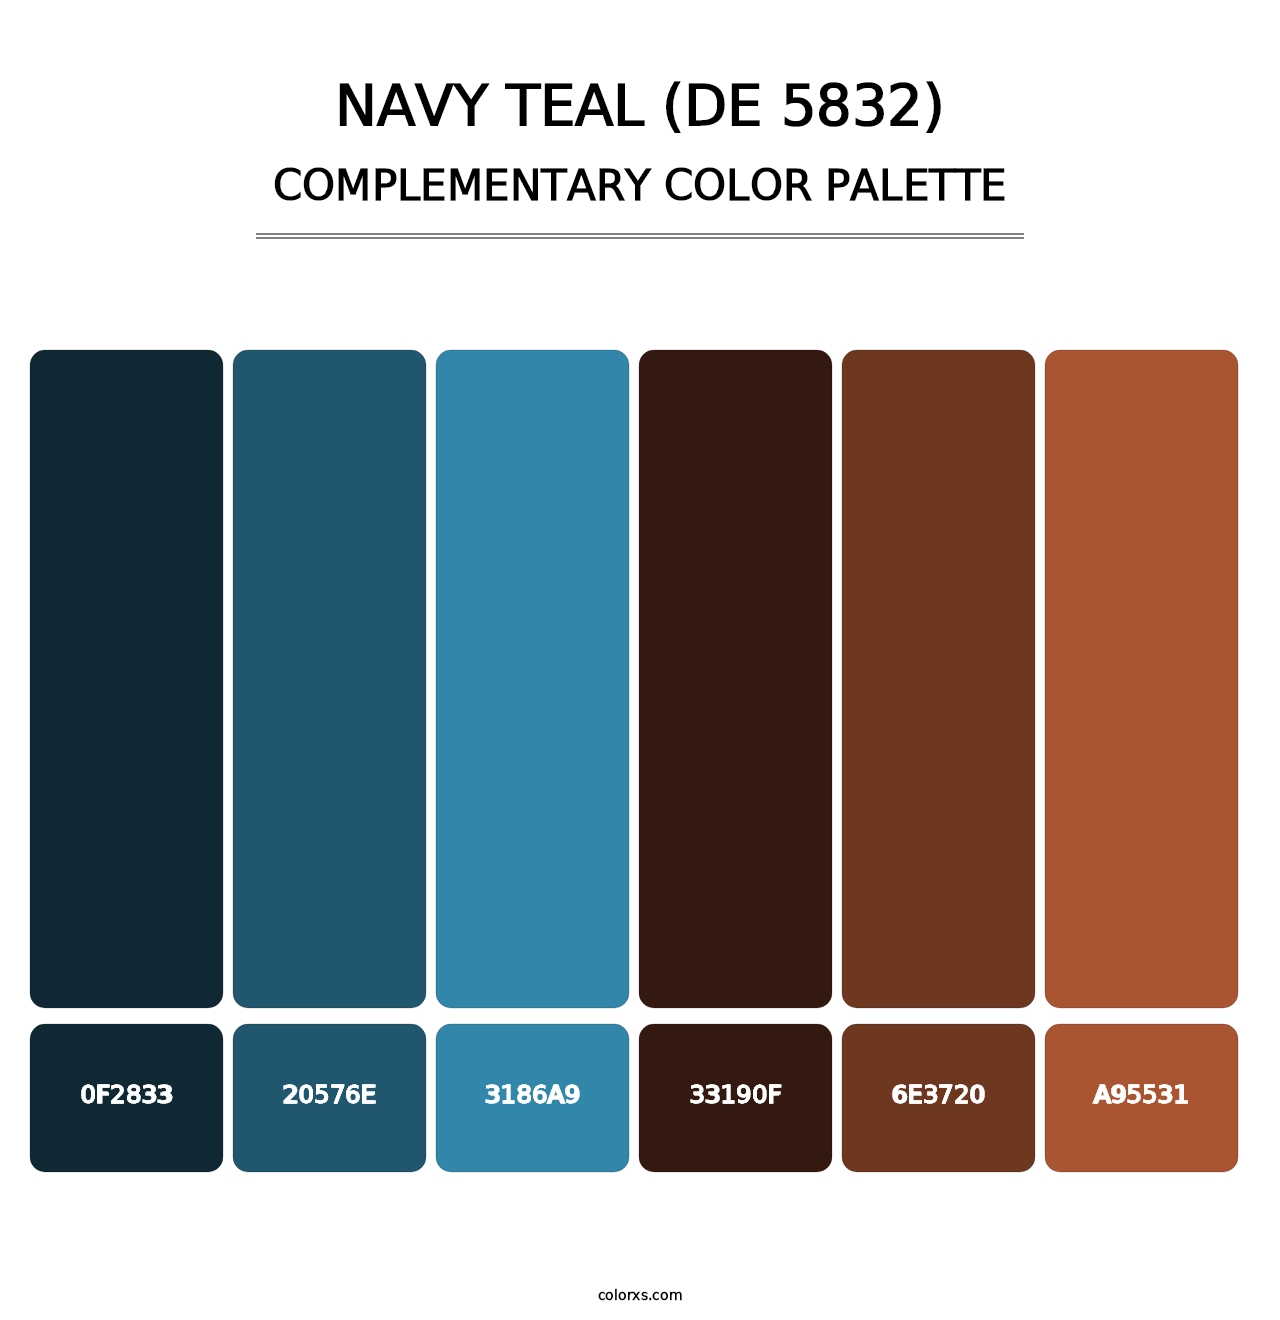 Navy Teal (DE 5832) - Complementary Color Palette